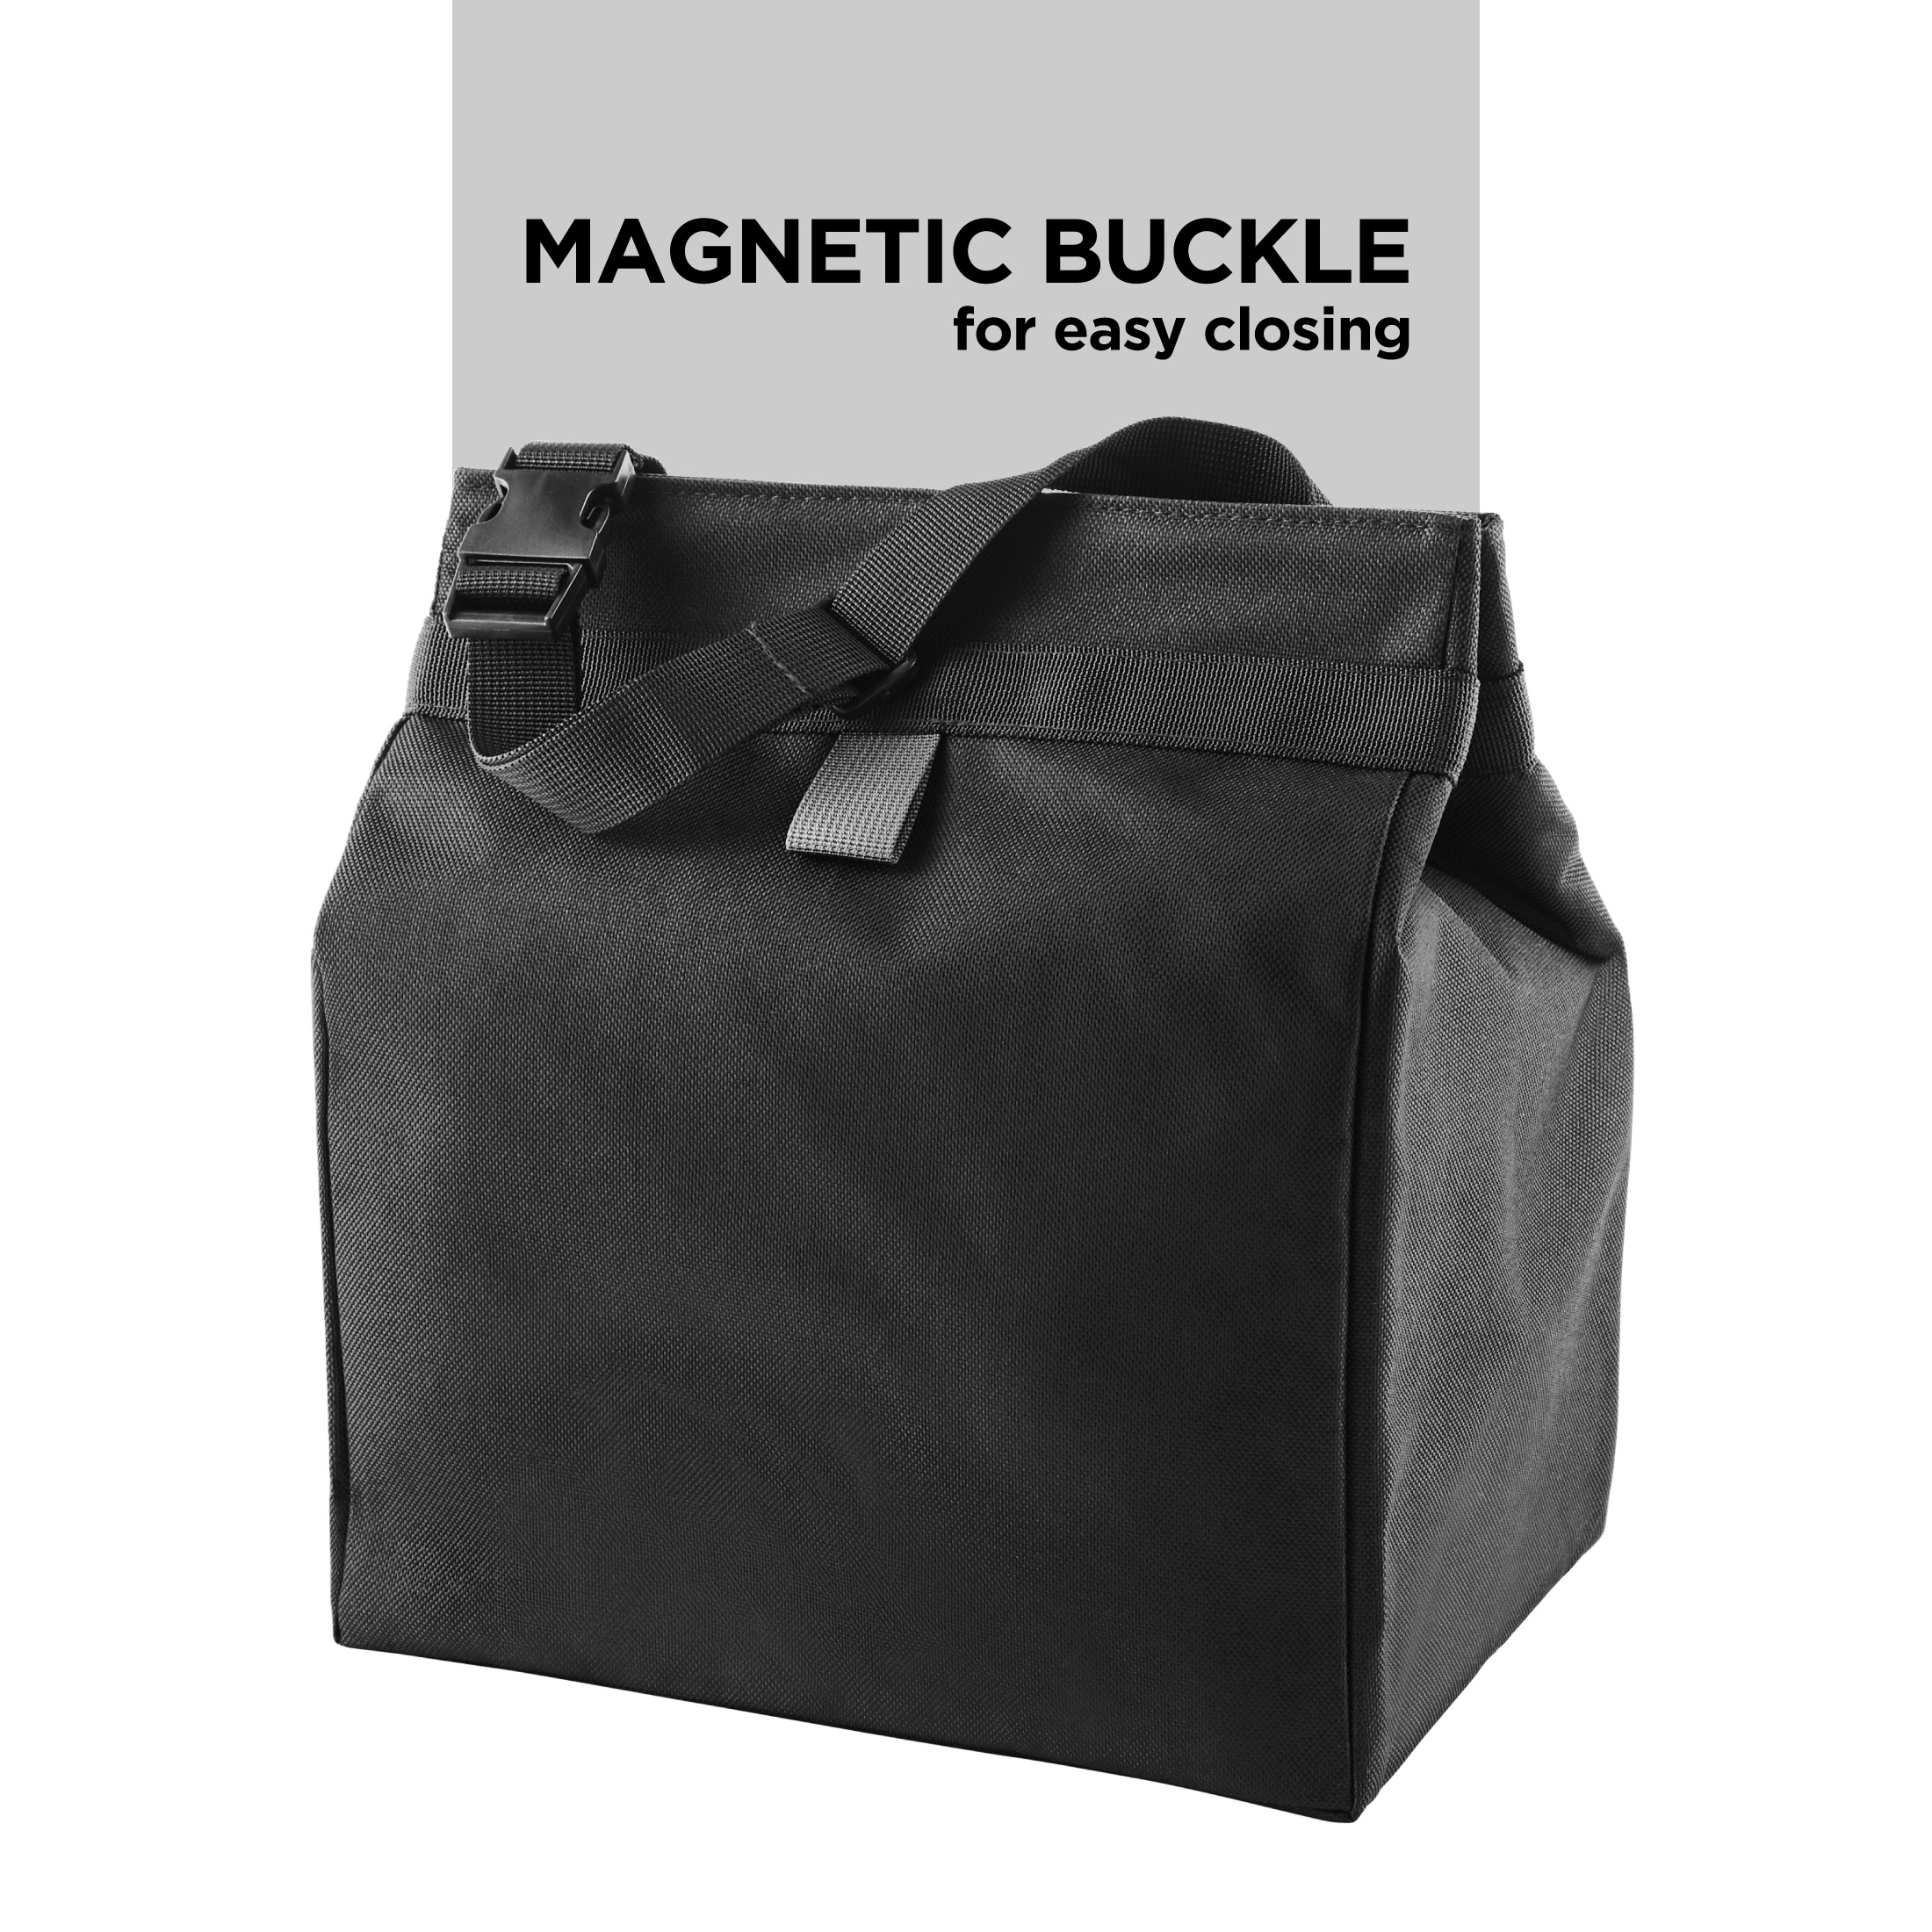 Auto Drive Black Premium Storage Bag Universal Fit On Car&Vehicle's Seatback 1 Pack, L10 inchx W7 inchx H12 inch, Size: 10 inch x 7 inch x 12 inch